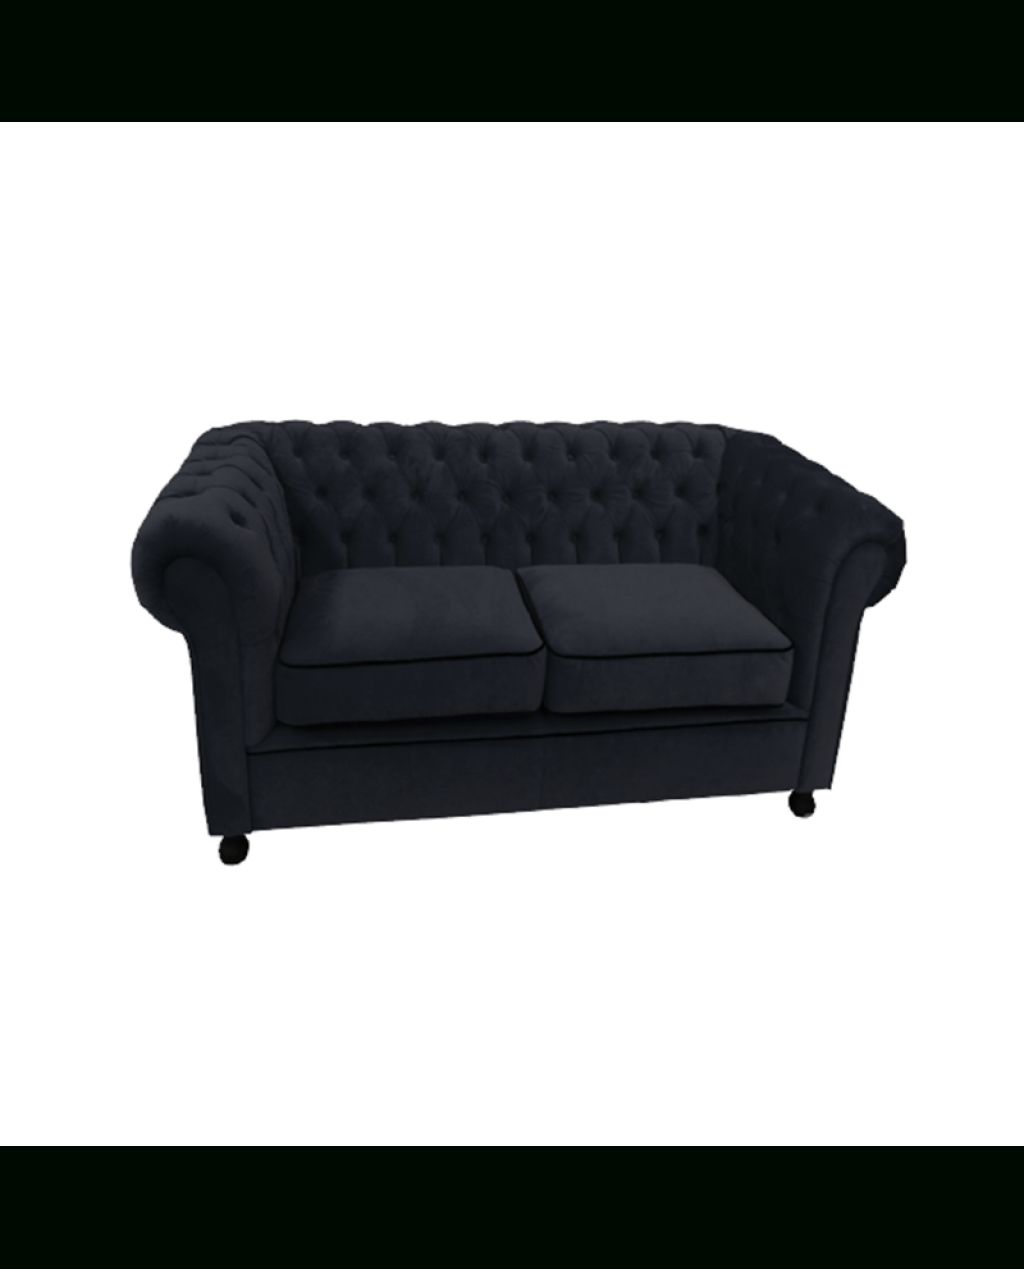 Trendy Black Velvet Chesterfield Style 2 Seater Sofa Hire For Black 2 Seater Sofas (View 2 of 20)